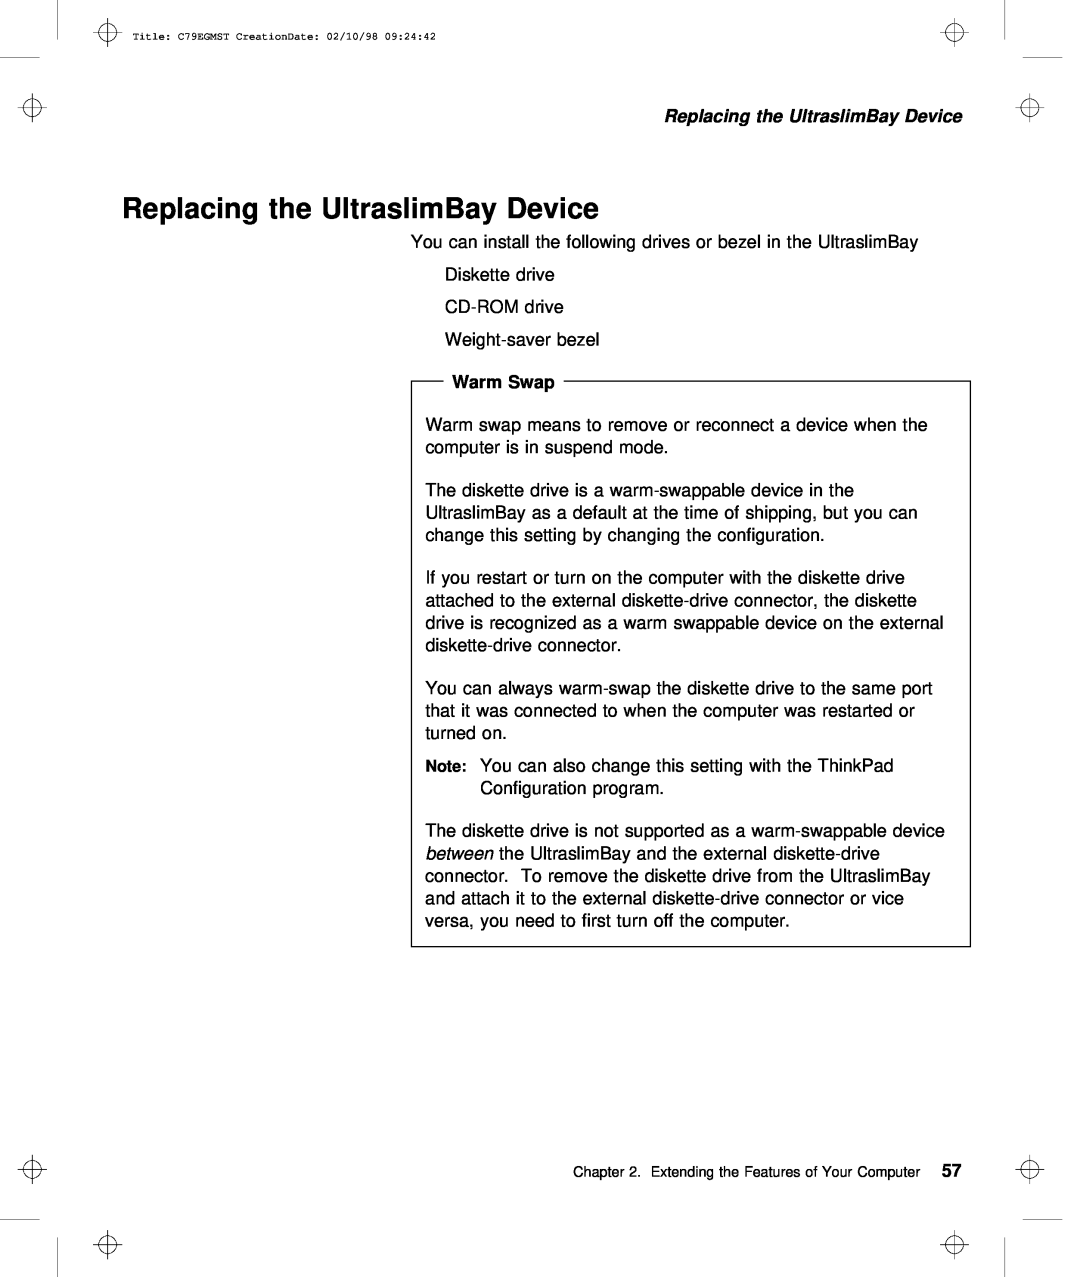 IBM C79EGMST manual Replacing the UltraslimBay Device, Warm Swap 